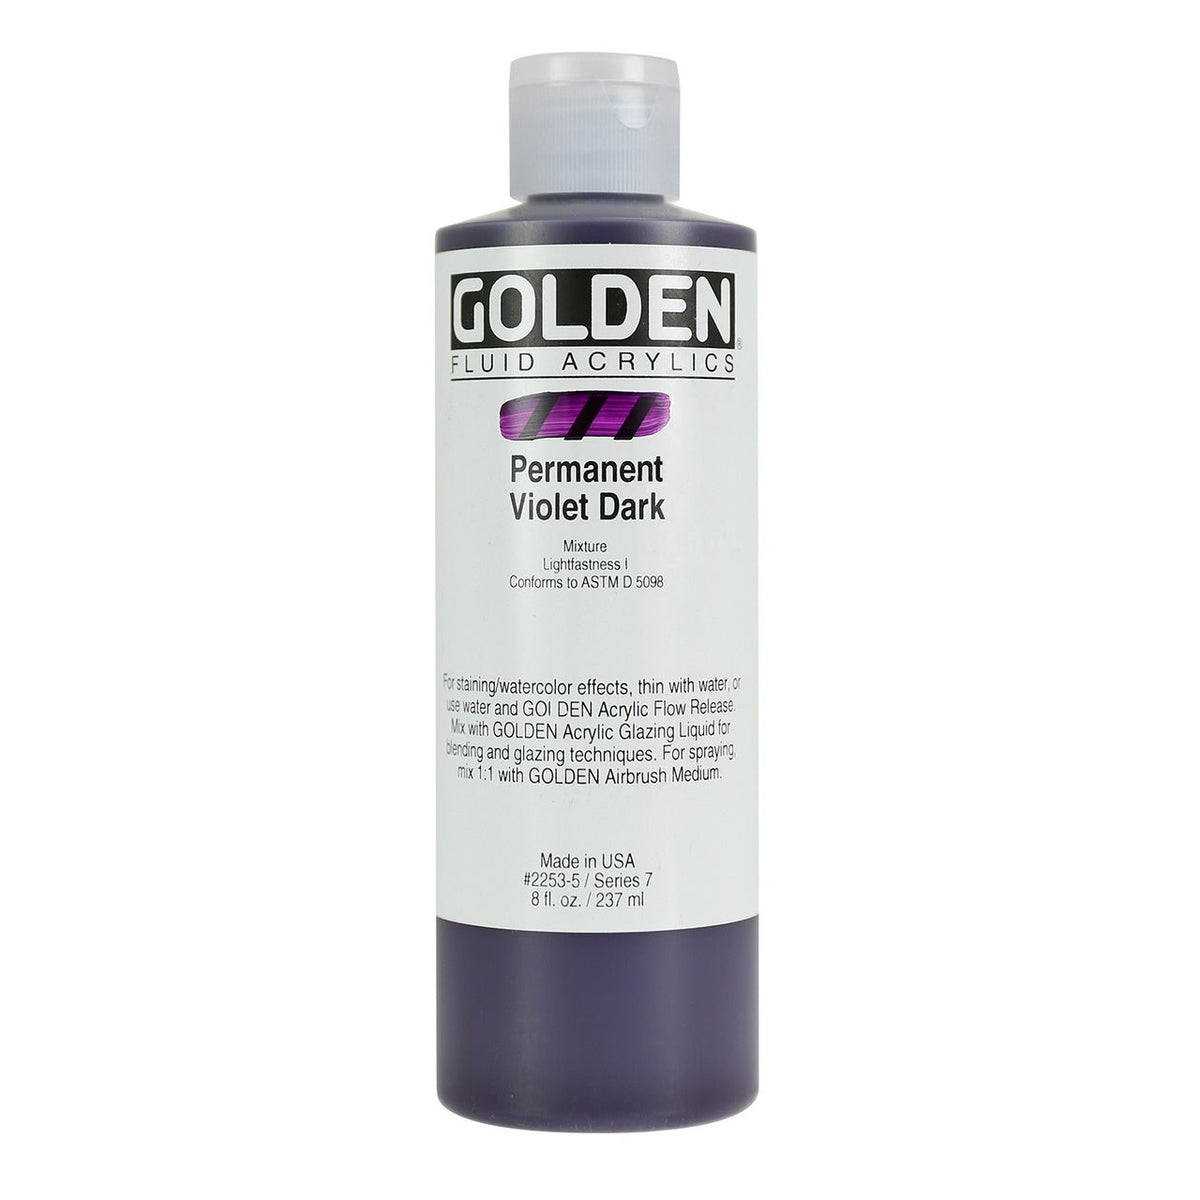 Golden Fluid Acrylic Permanent Violet Dark 8 oz - merriartist.com